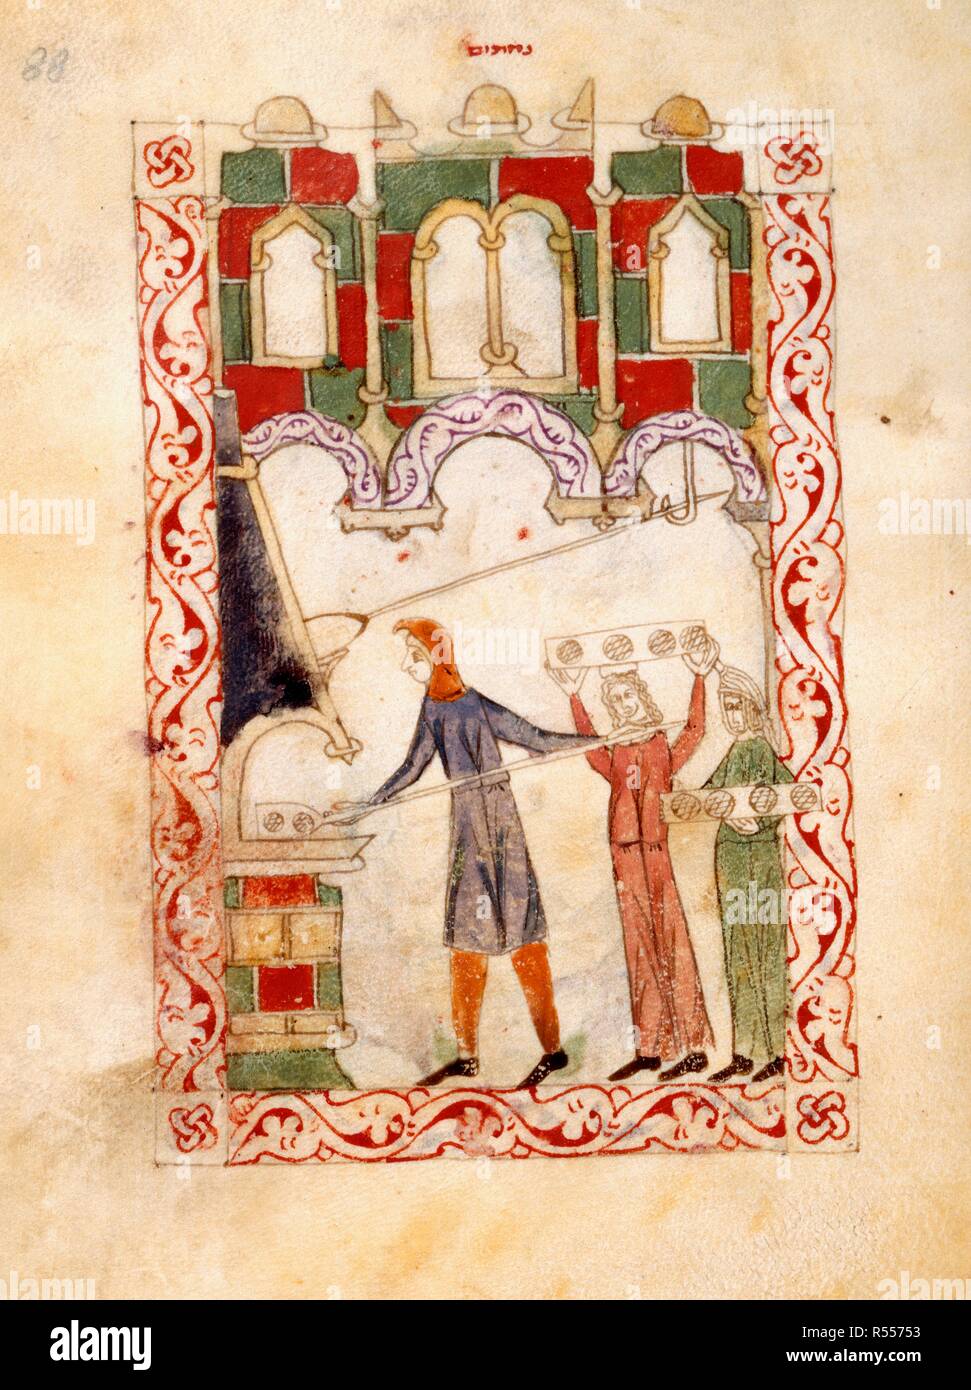 Baking. Hispano-Moresque Haggadah. Castile, c.1300. Baking of the unleavened bread (matzah). Vellum manuscript.  Image taken from Hispano-Moresque Haggadah.  Originally published/produced in Castile, c.1300. . Source: Or. 2737, f.88. Language: Hebrew. Stock Photo